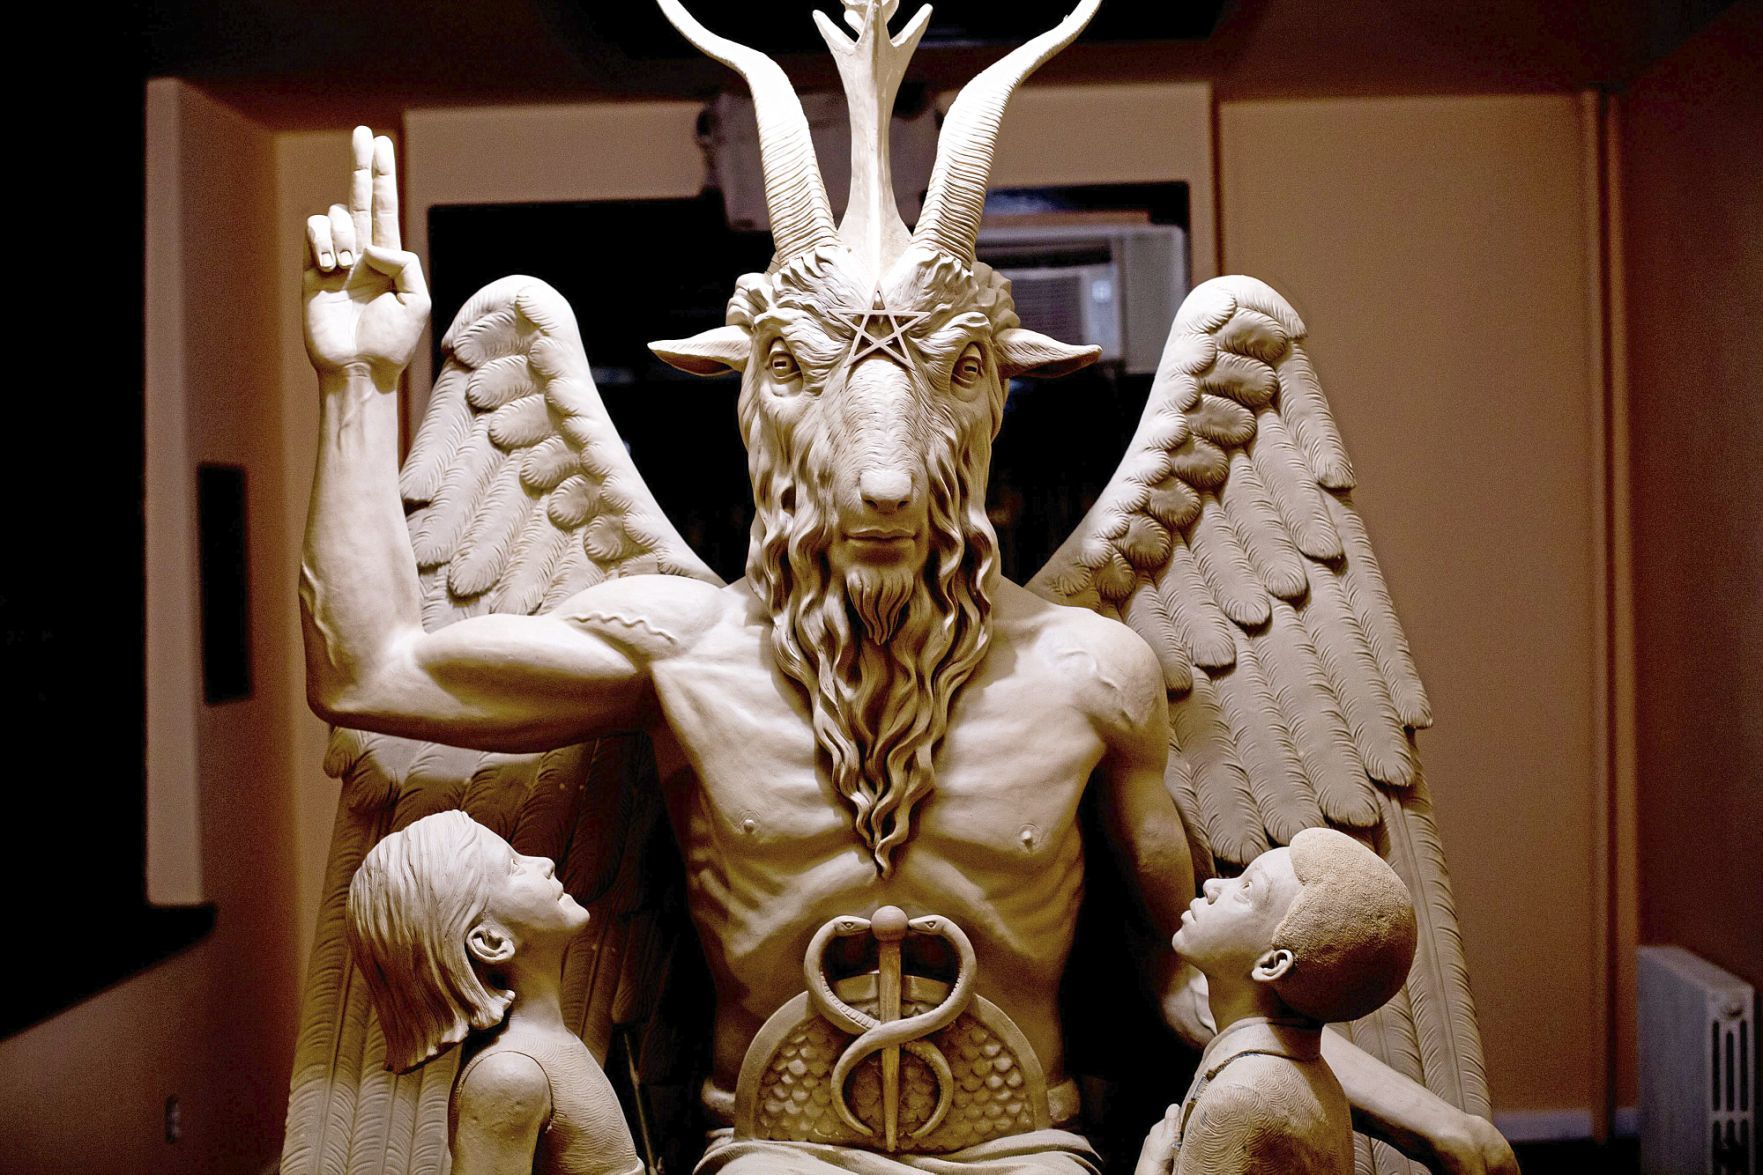 Satanic Temple spokesman says 'iconic' Baphomet monument is in storage